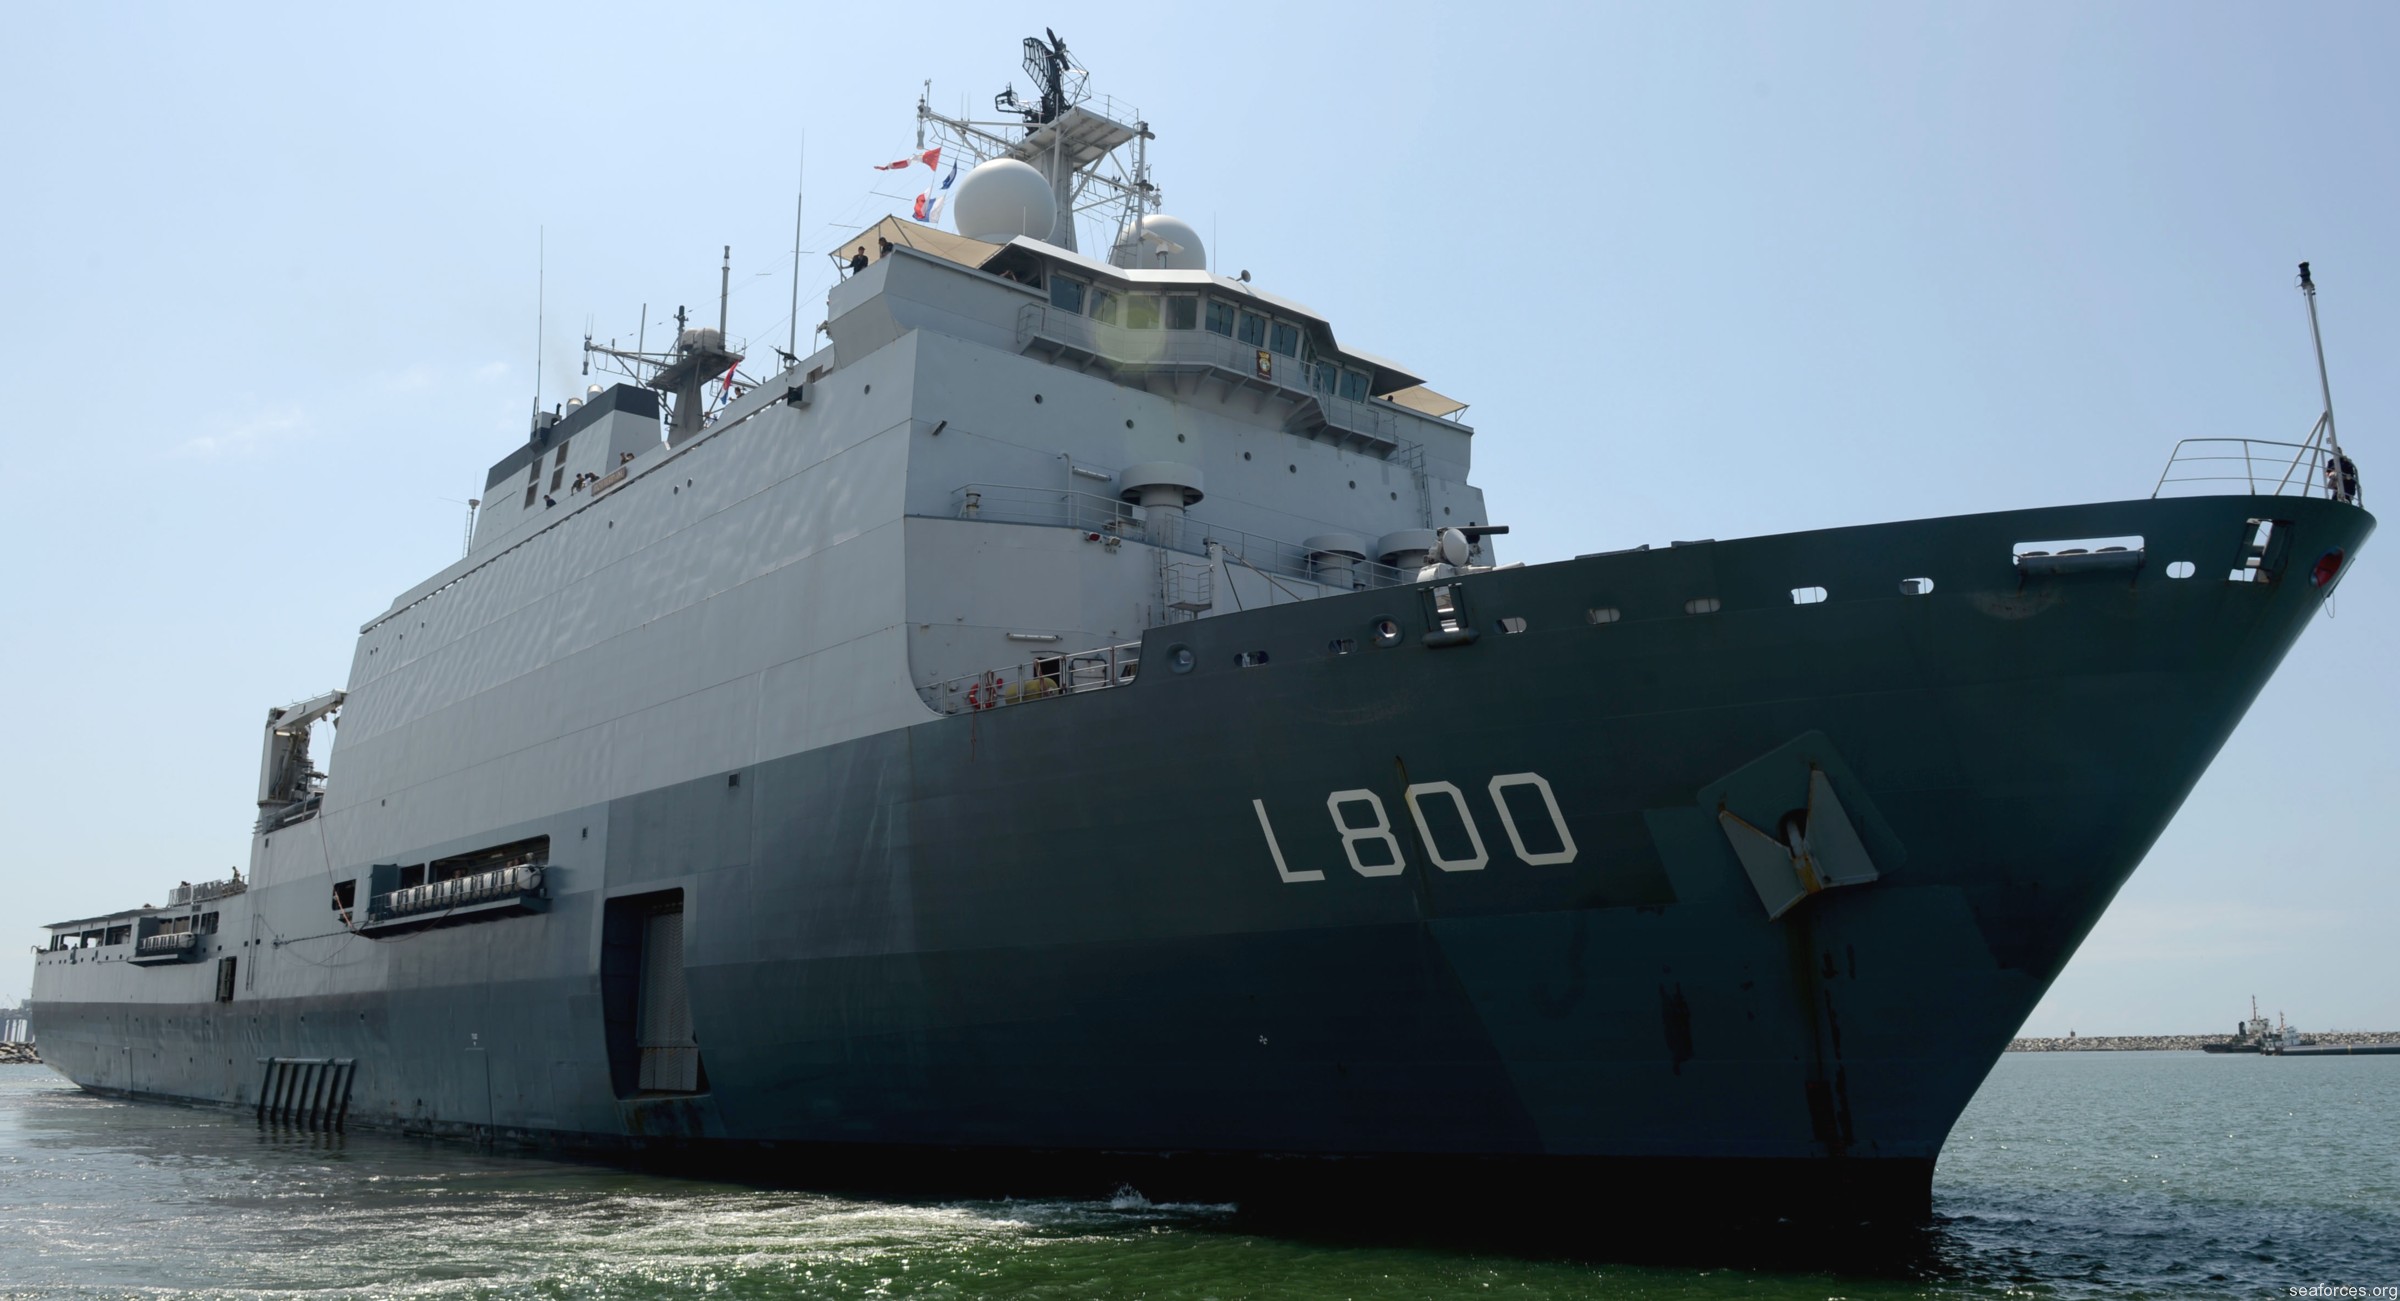 l-800 hnlms rotterdam amphibious landing ship dock lpd royal netherlands navy 11